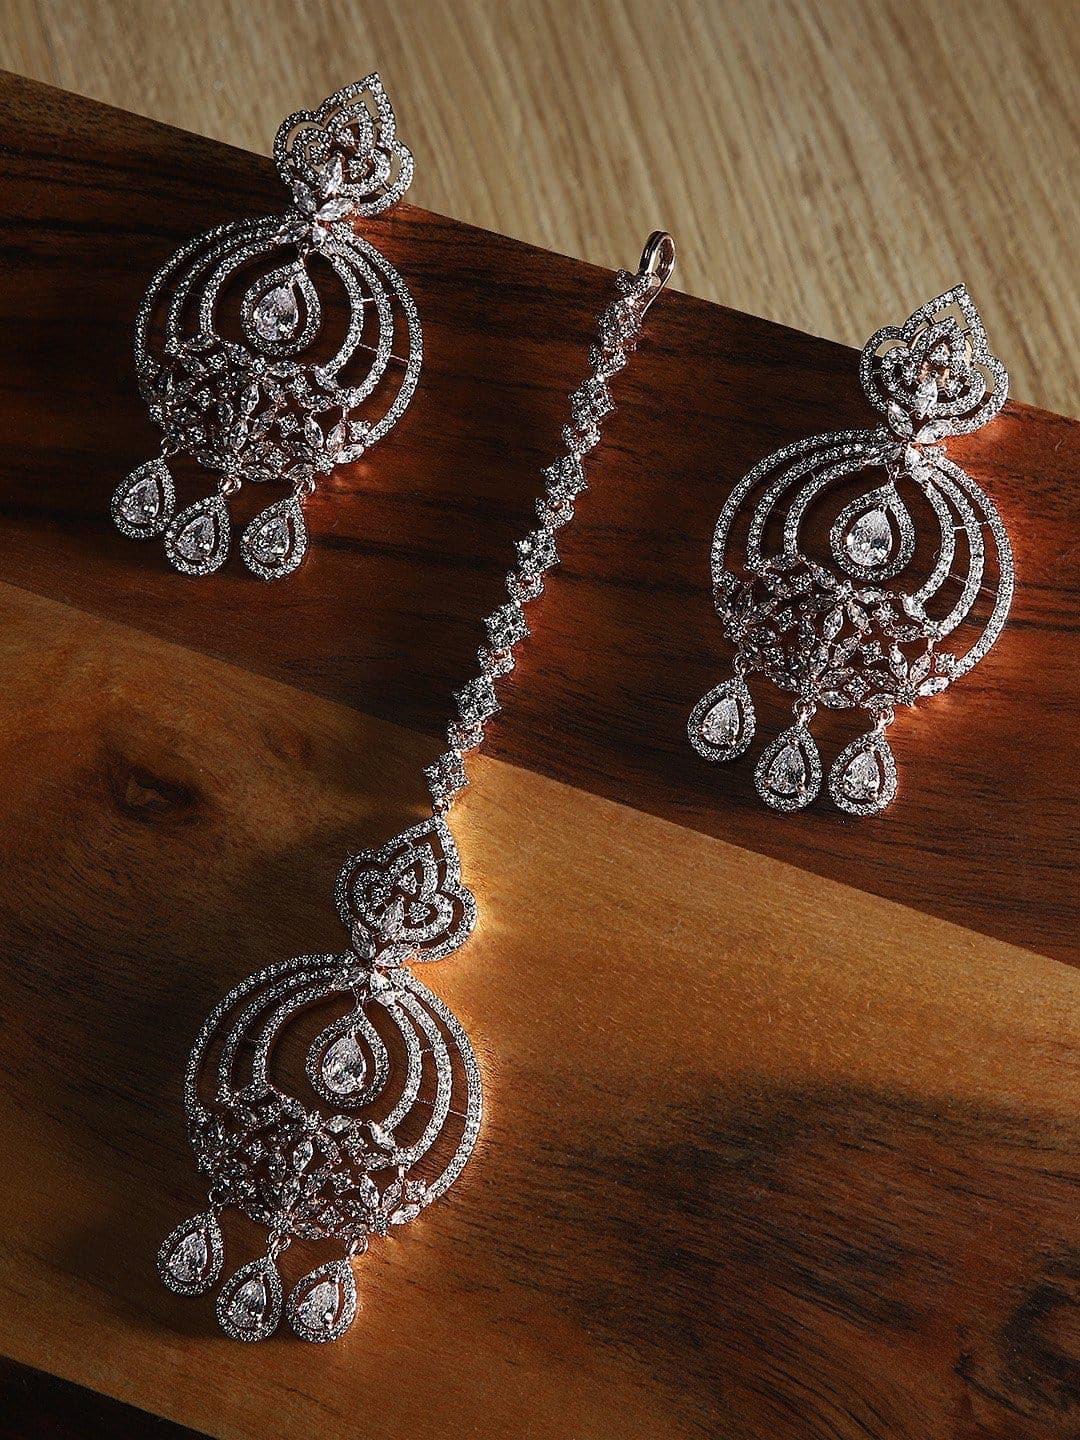 The origin of Meghan Markles diamond chandelier earrings revealed   Something About Rocks